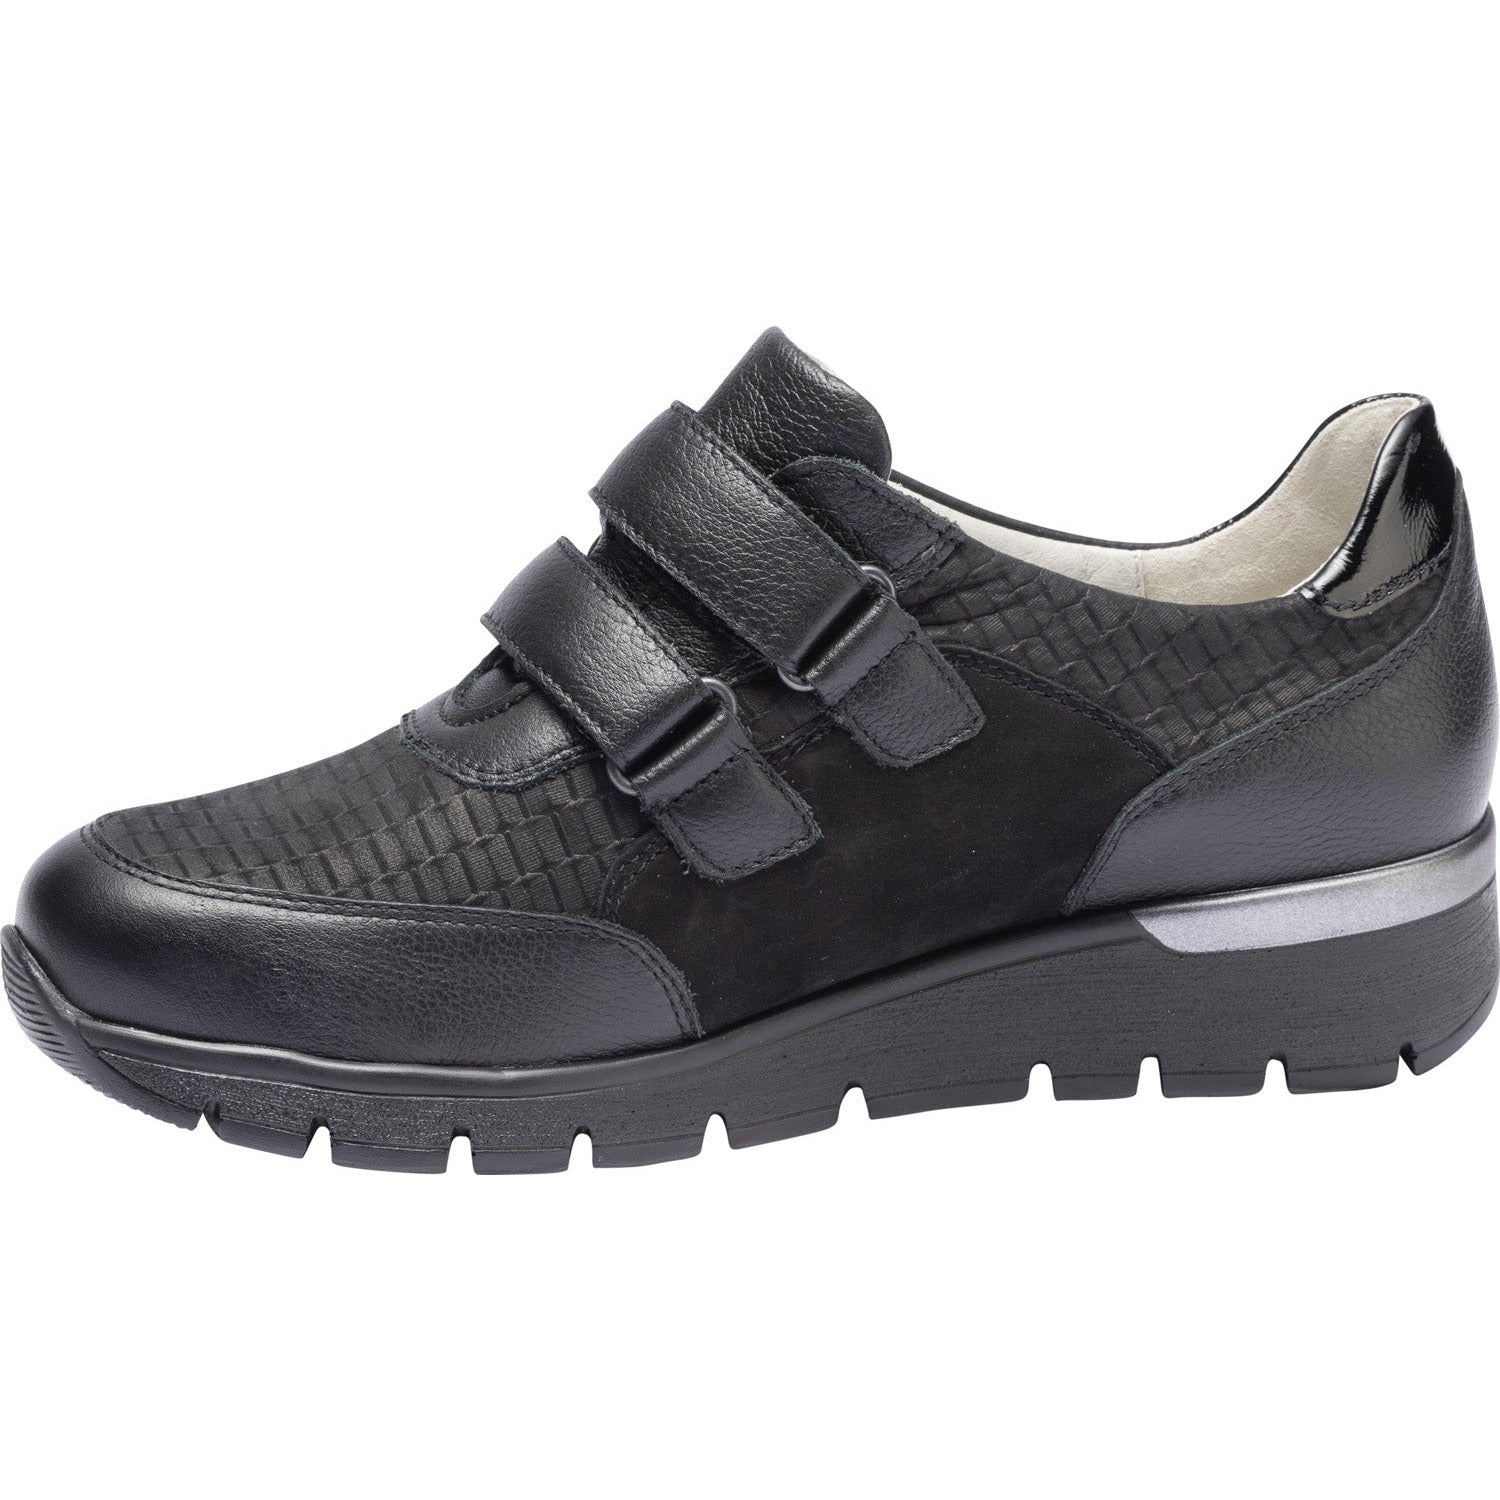 Waldlaufer Ramona (626301) - Ladies Velcro Wedge Shoe in Black Waldlaufer Shoes & Boots | Wide fit Shoes | Wisemans | Bantry | West Cork | Cork | Ireland